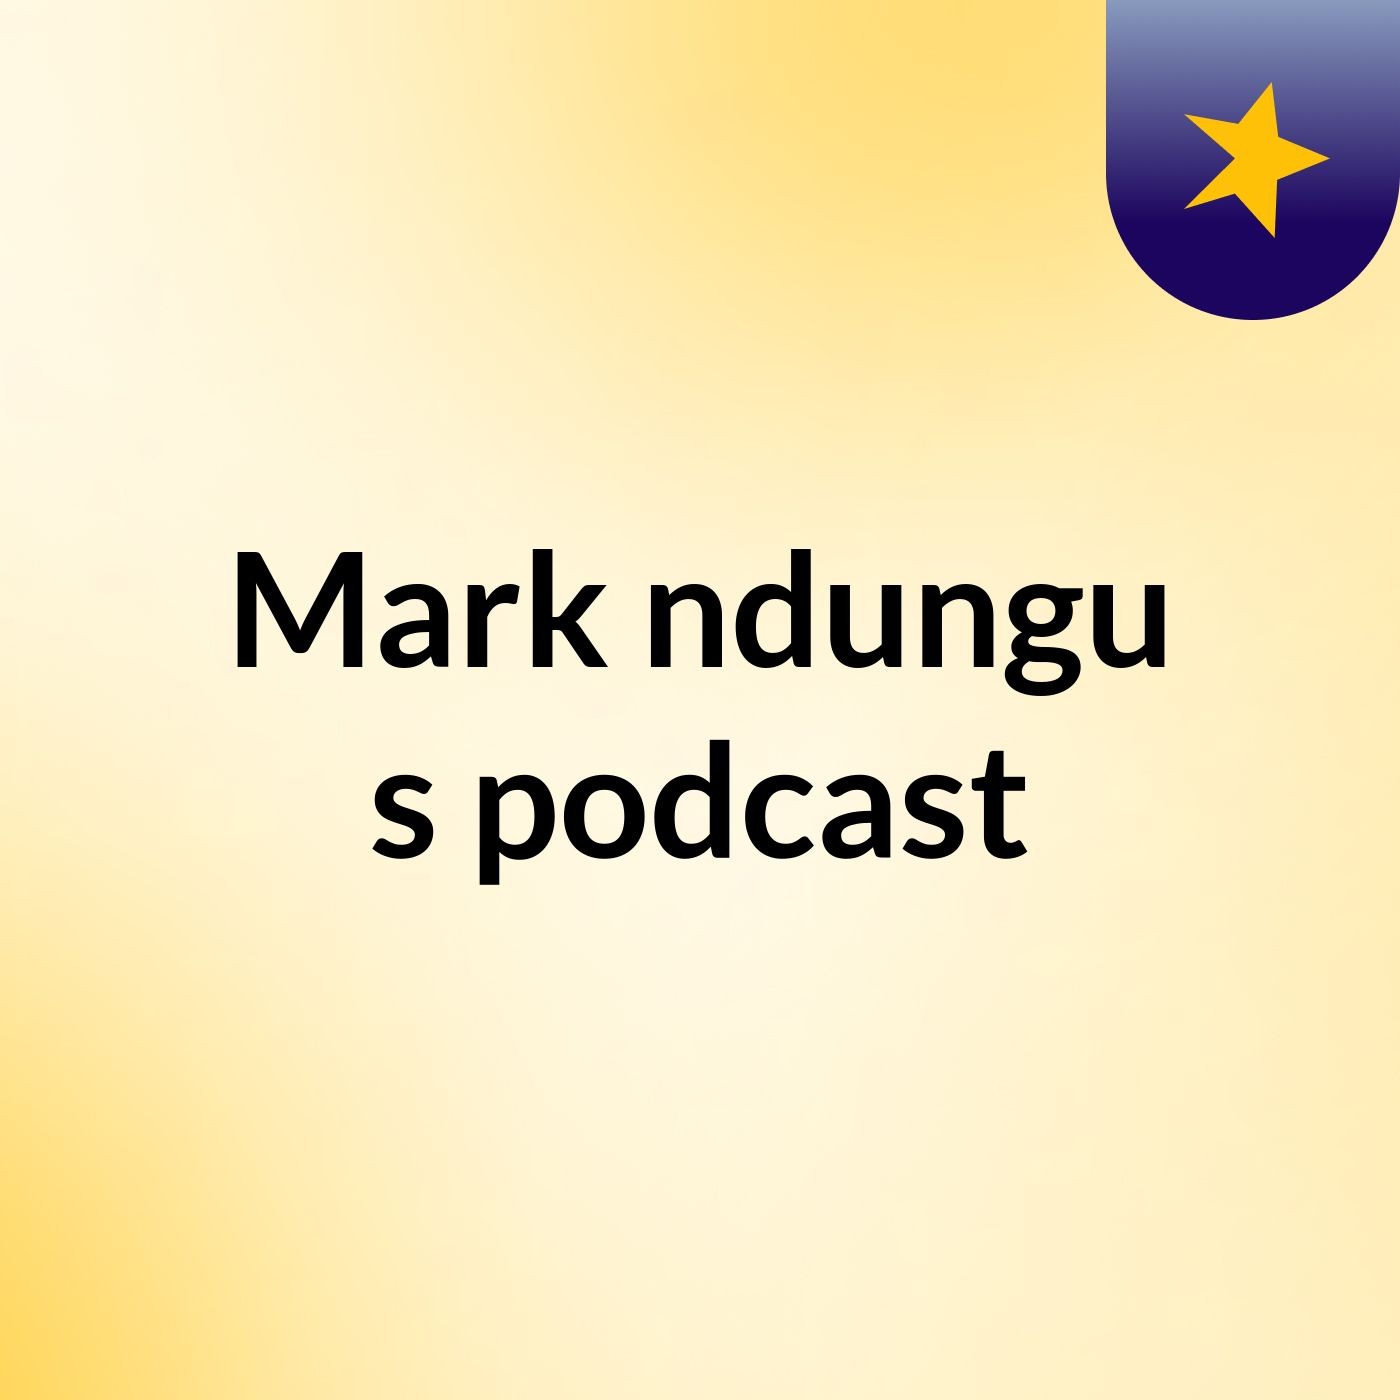 Episode 23 - Mark ndungu's podcast